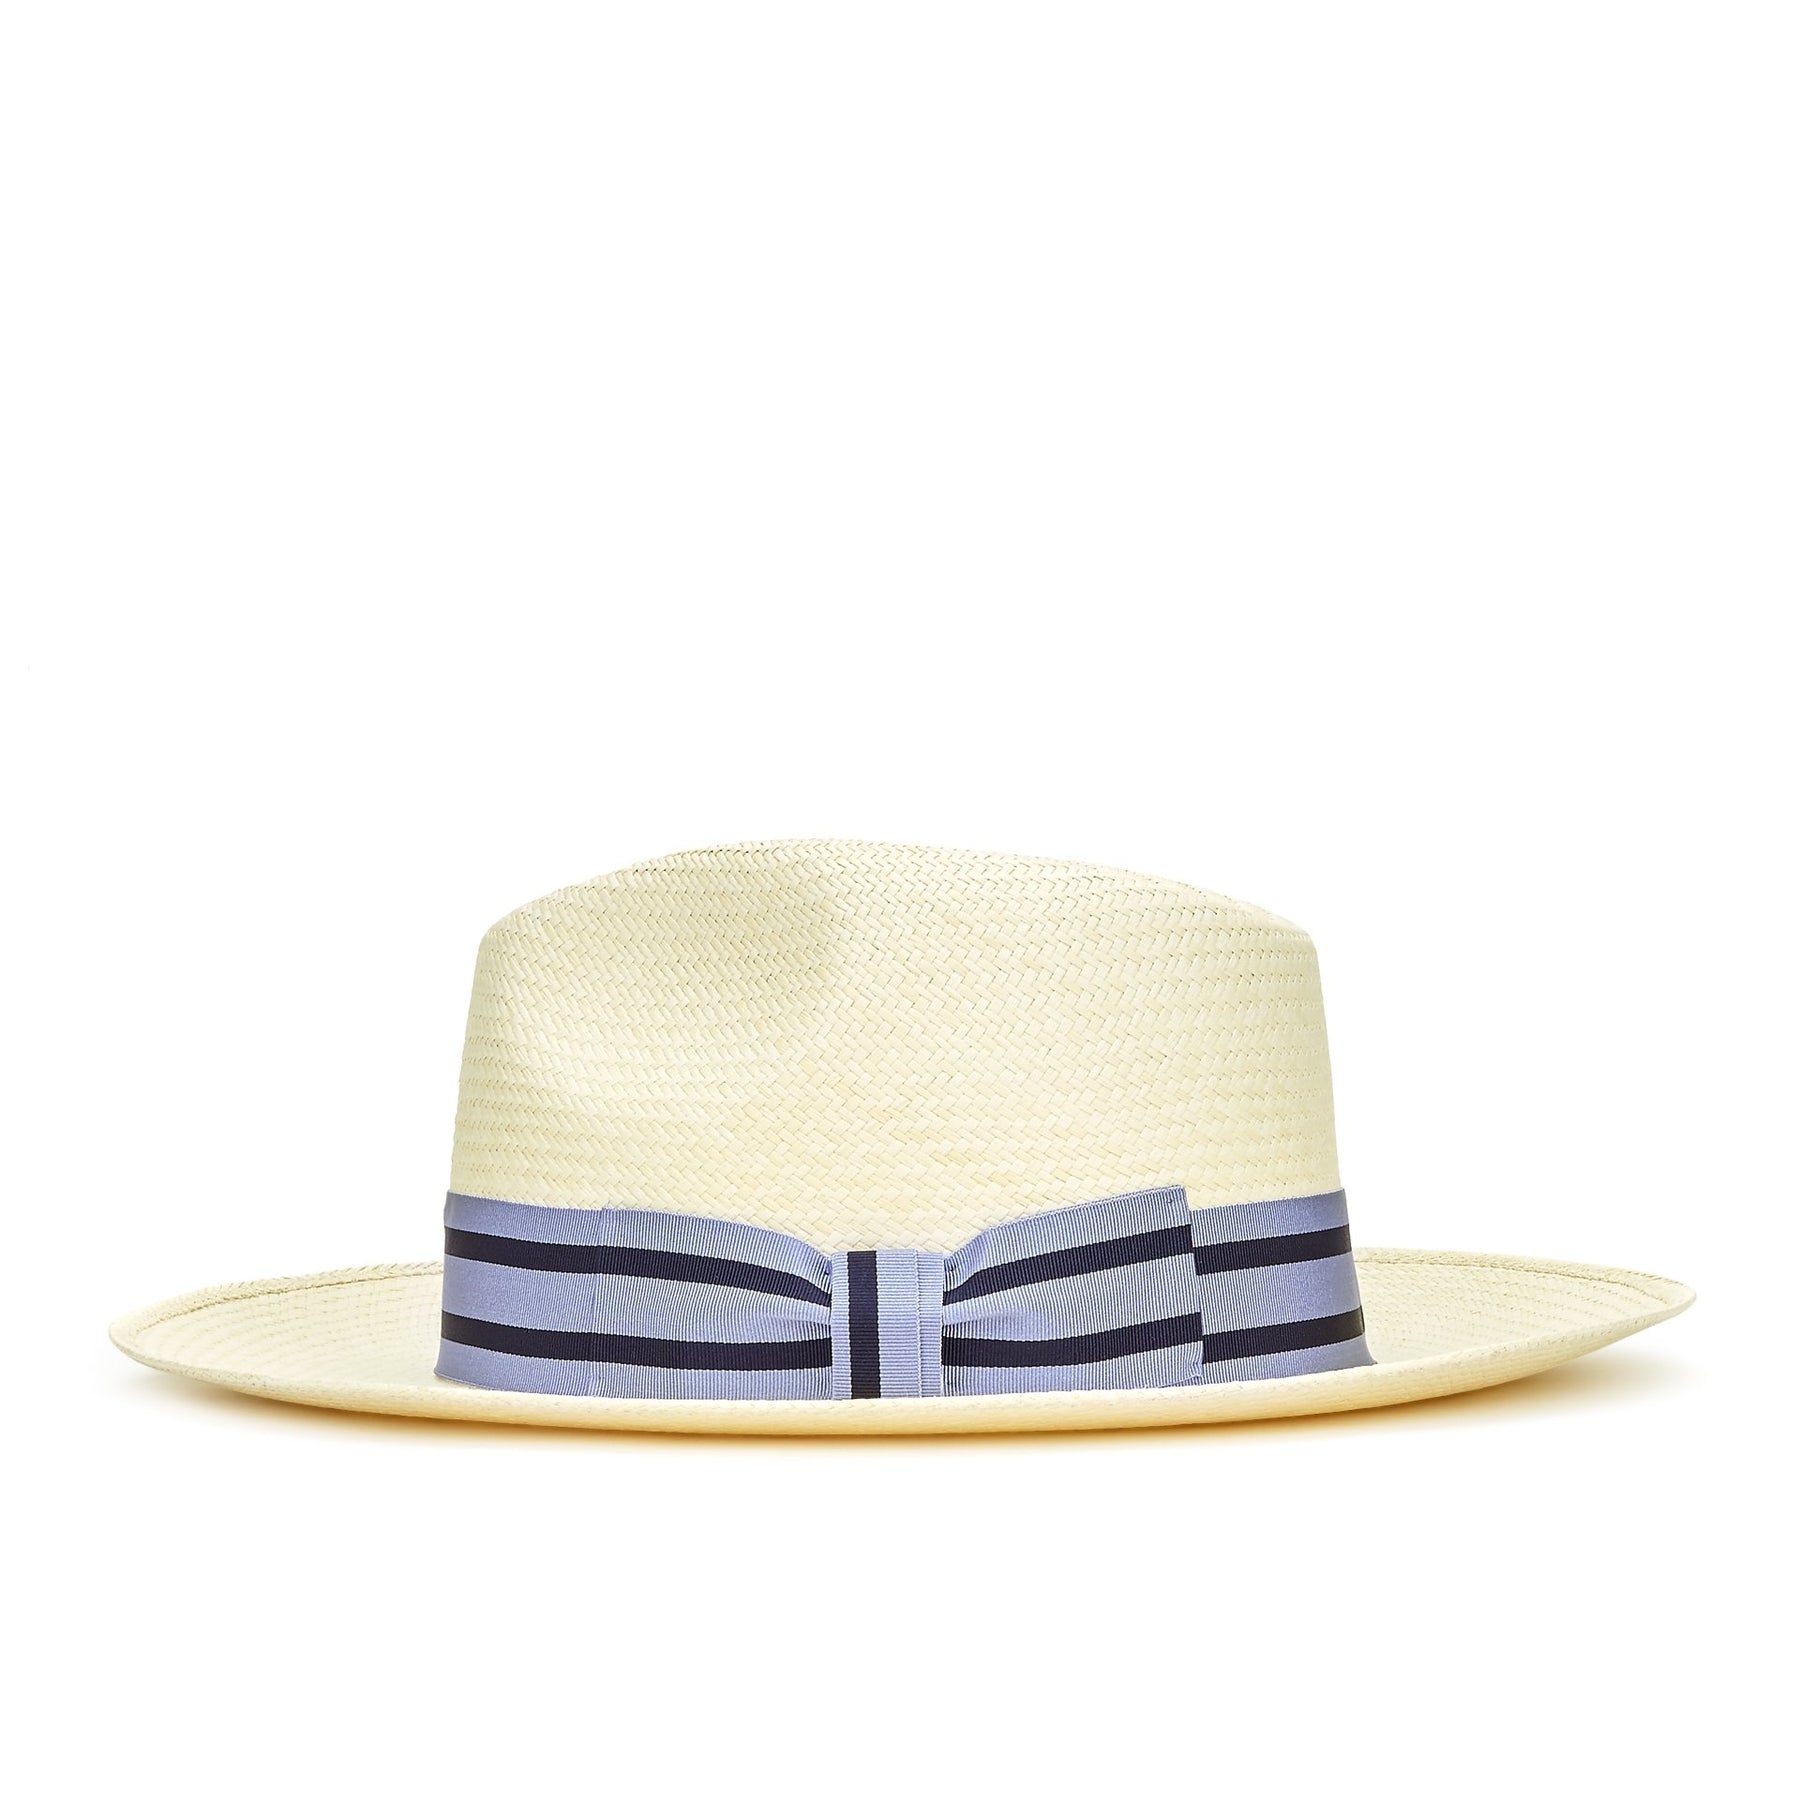 Stylish Panama Hats for Women - Silk Sun Hats & Straw Hats